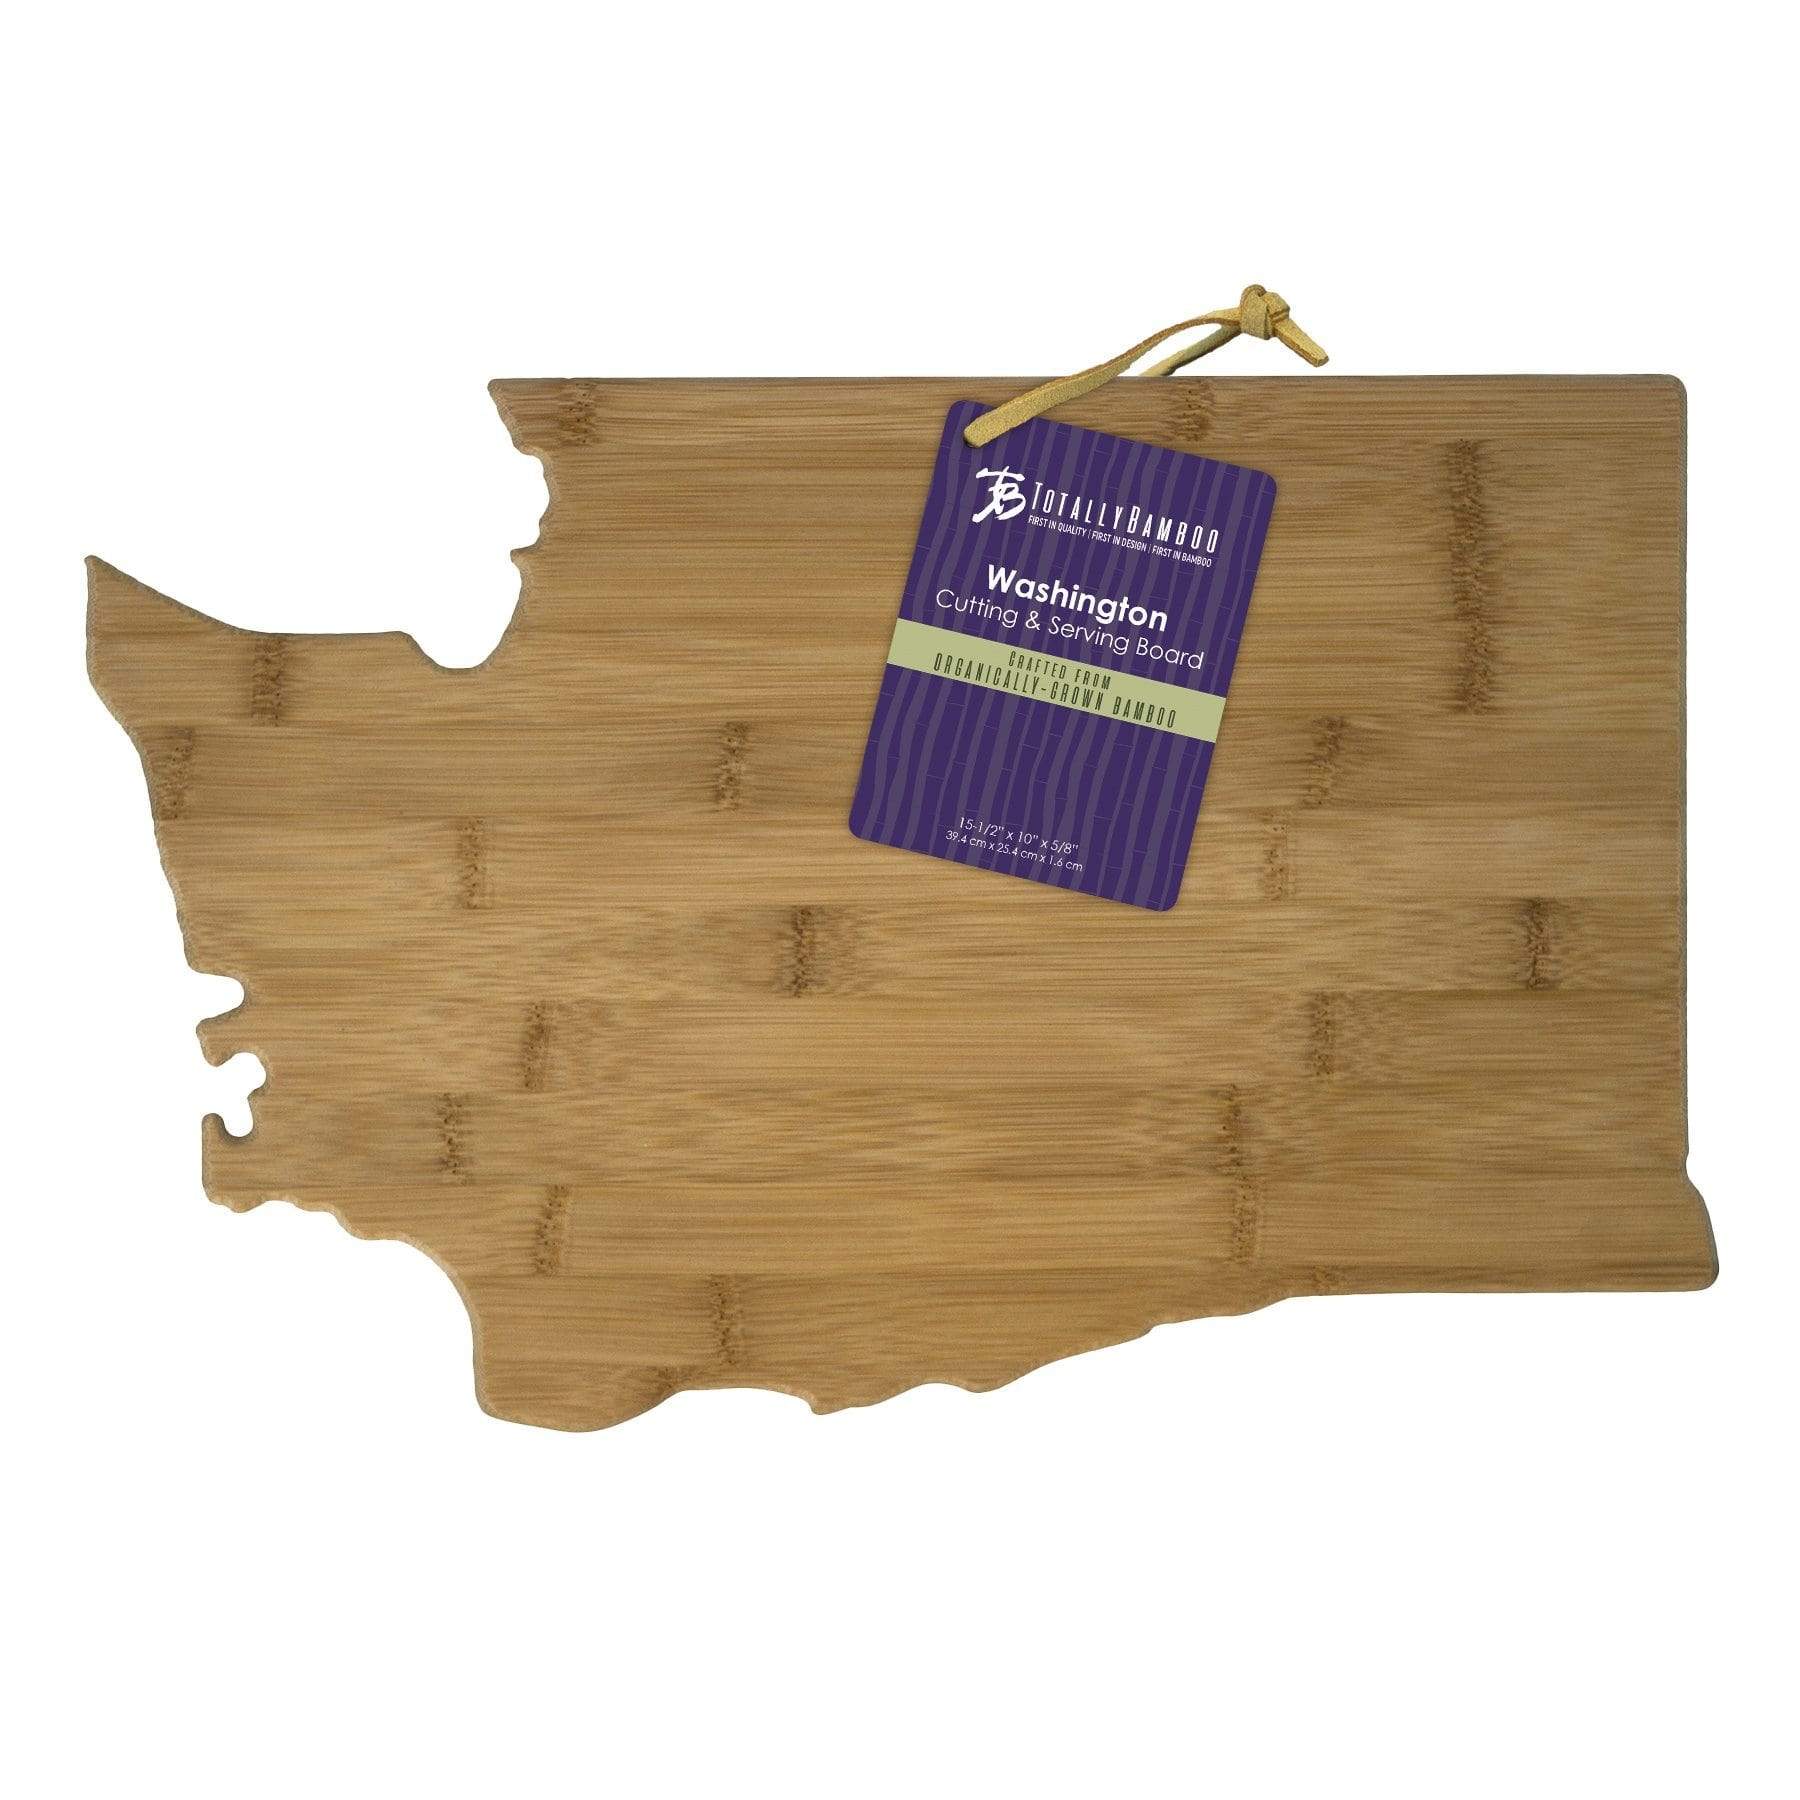 A cutting board that keeps you organized - The Boston Globe